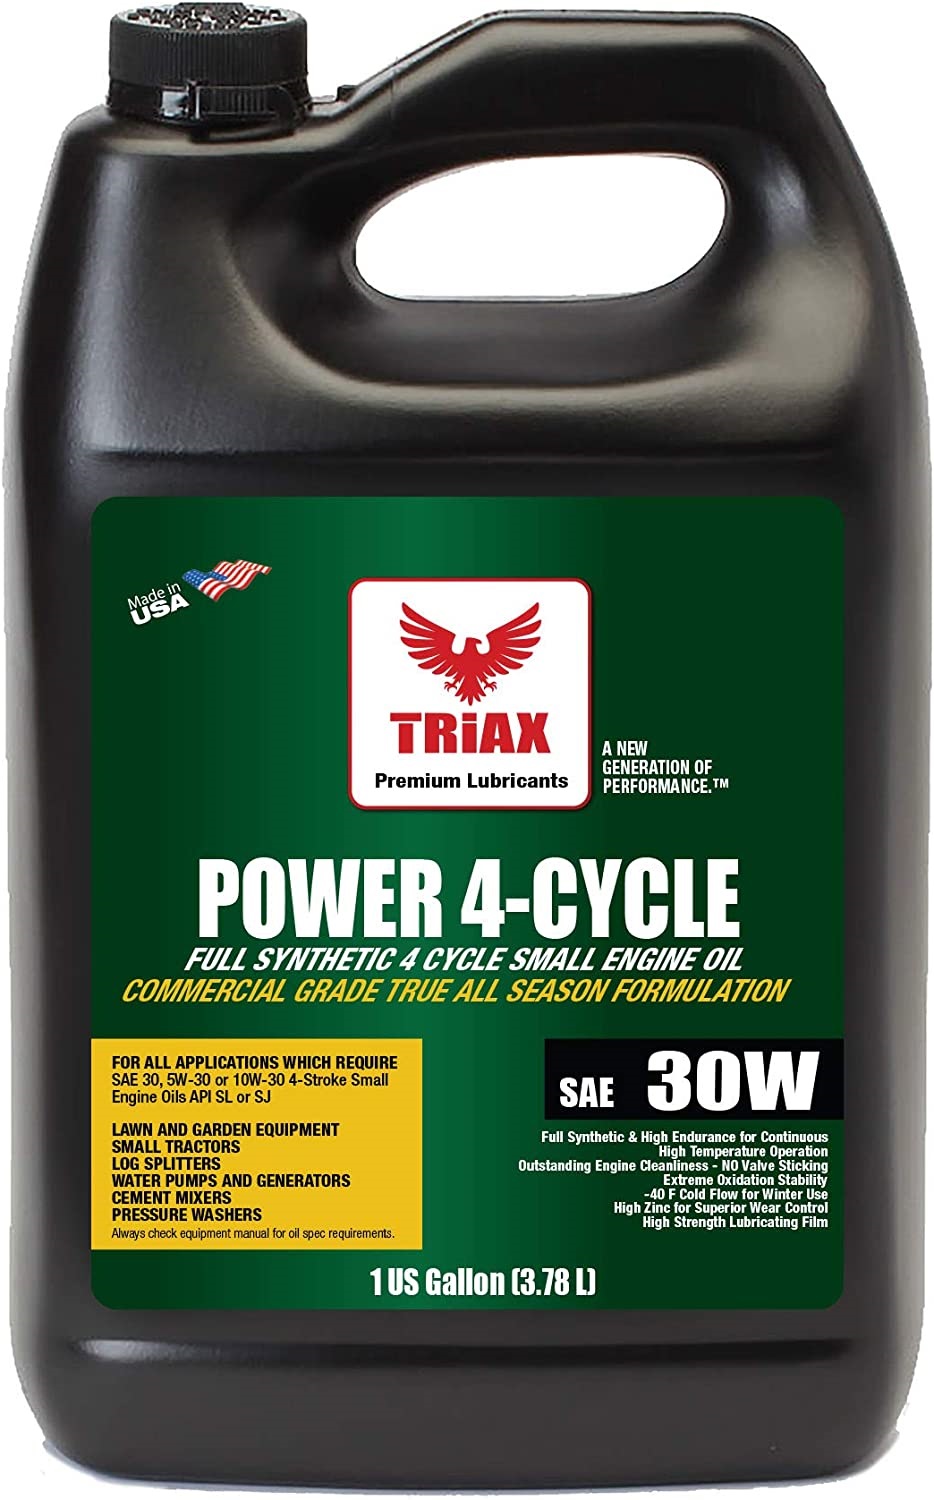 TRIAX Power 4-Cycle 30W Full Sintetic